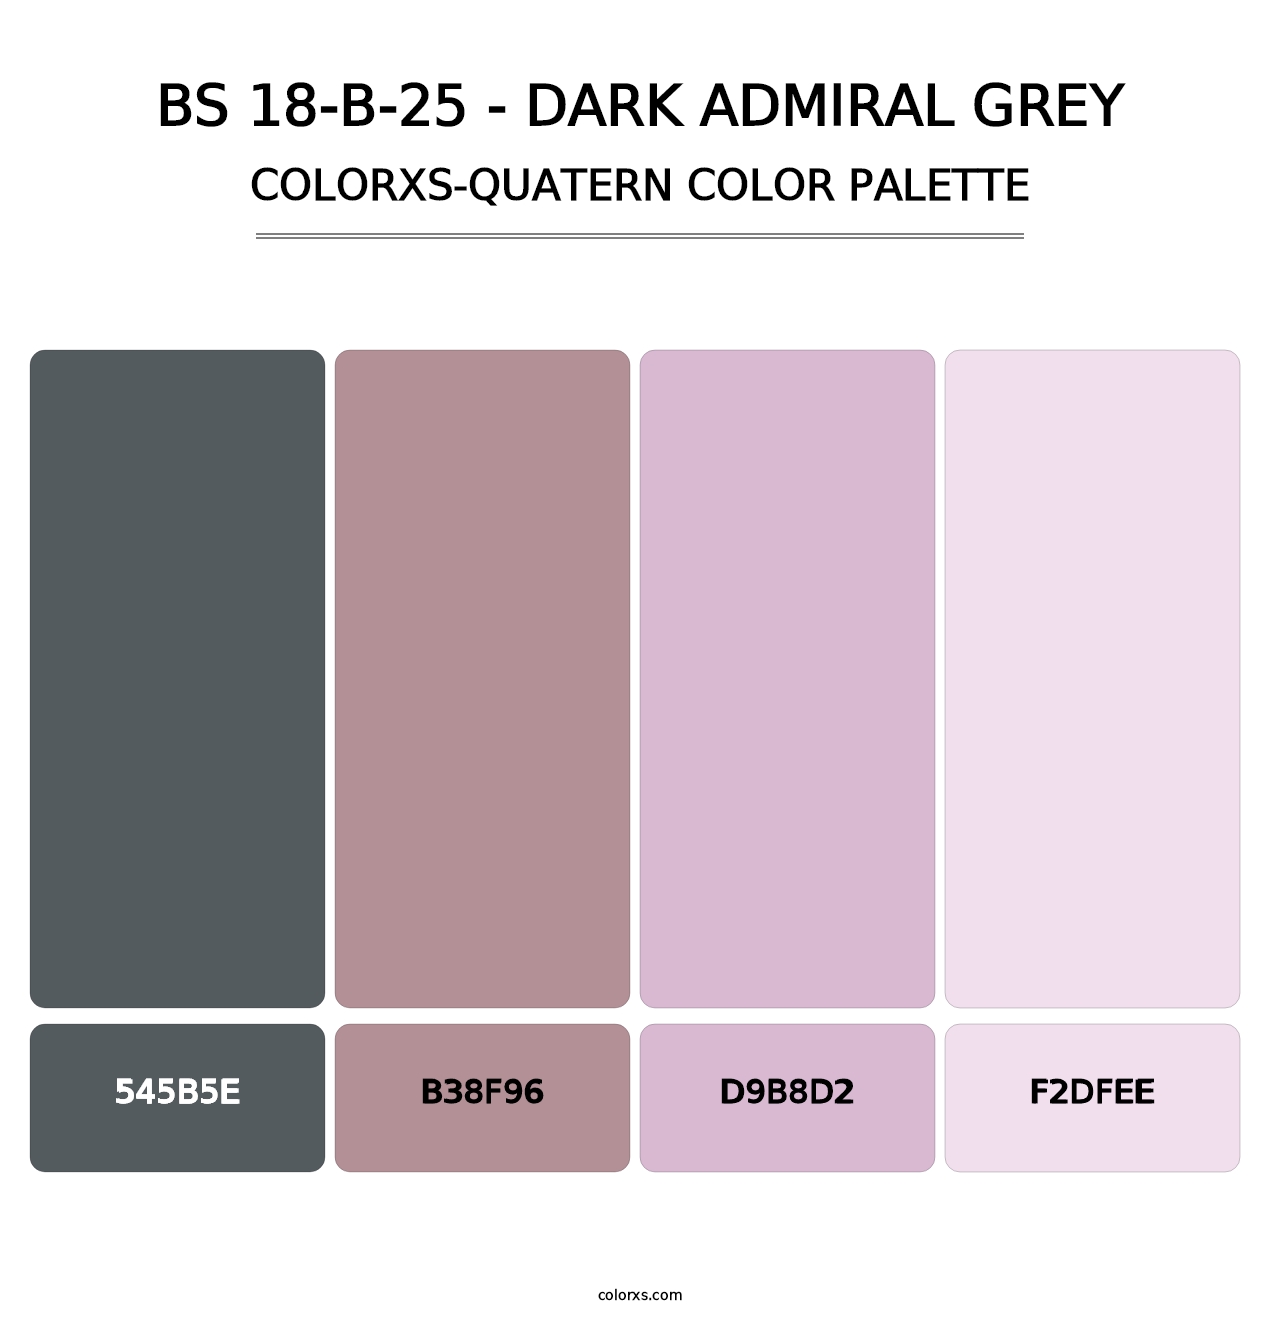 BS 18-B-25 - Dark Admiral Grey - Colorxs Quatern Palette